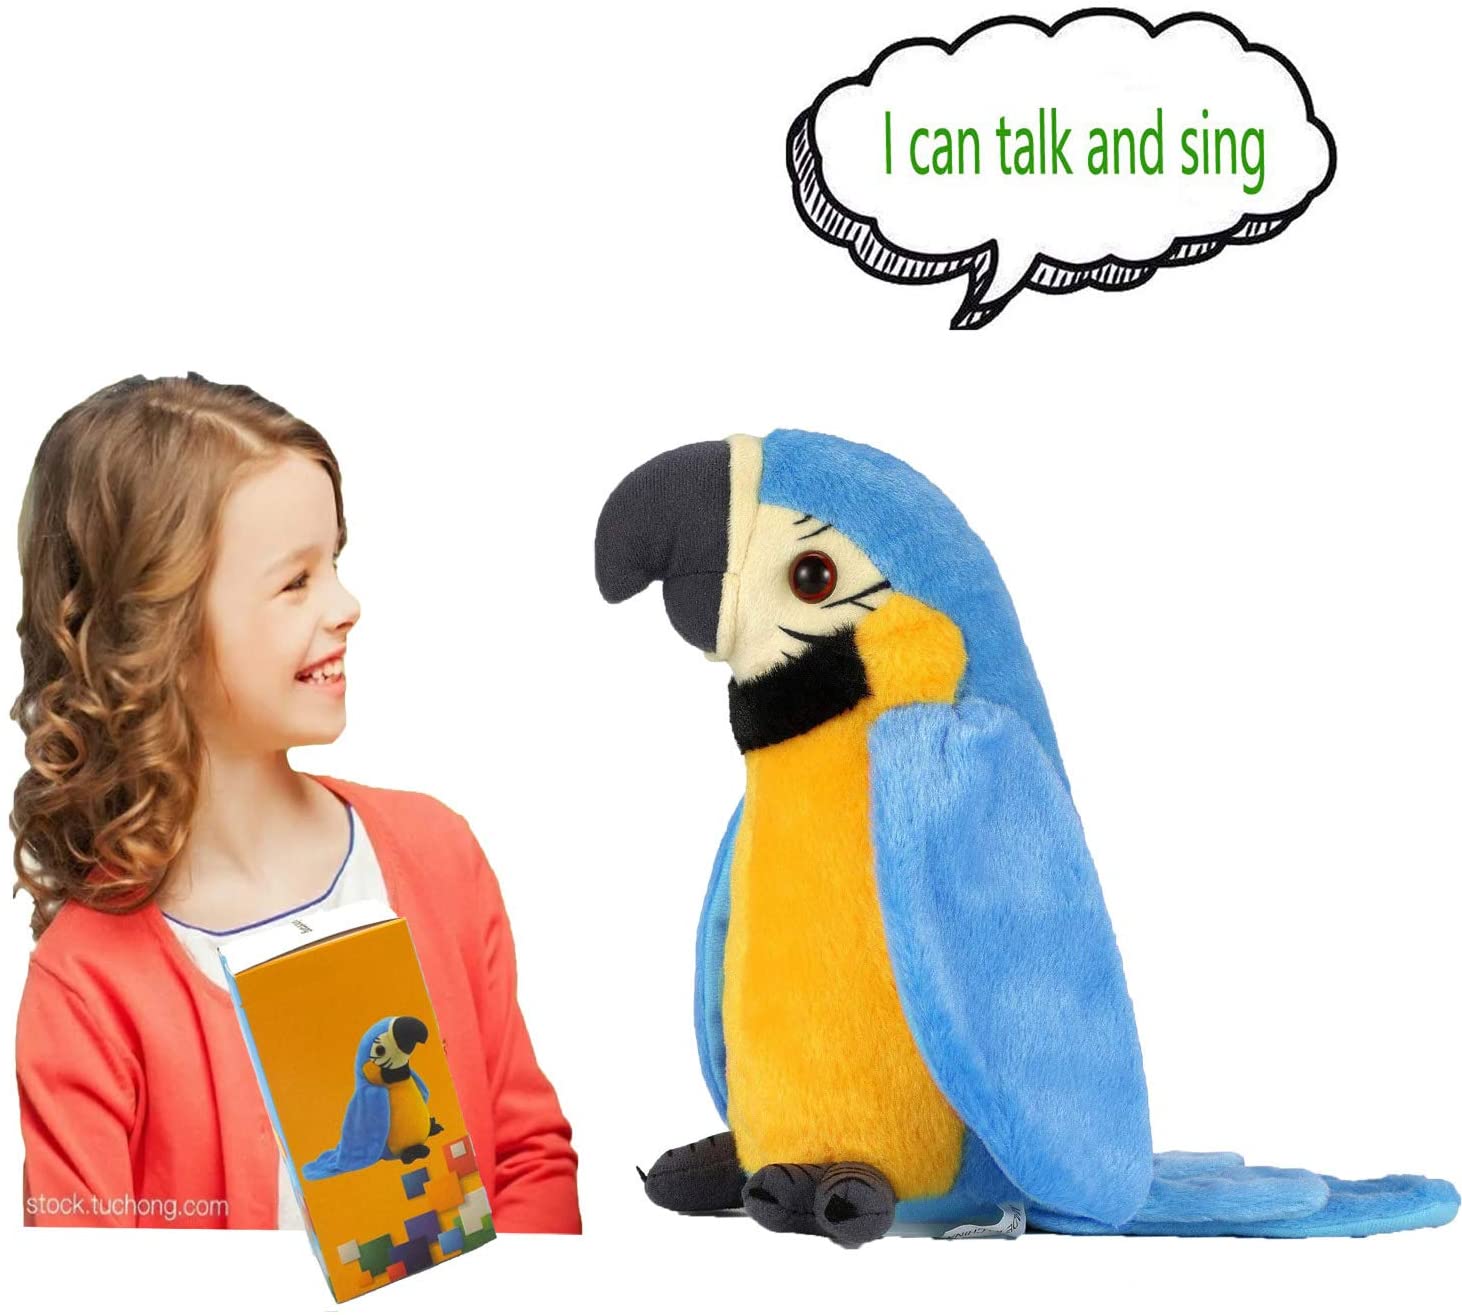 Kids Childlren Musical Plush Stuffed Toy Parrot Talking Bird Preschool Toys Gift 